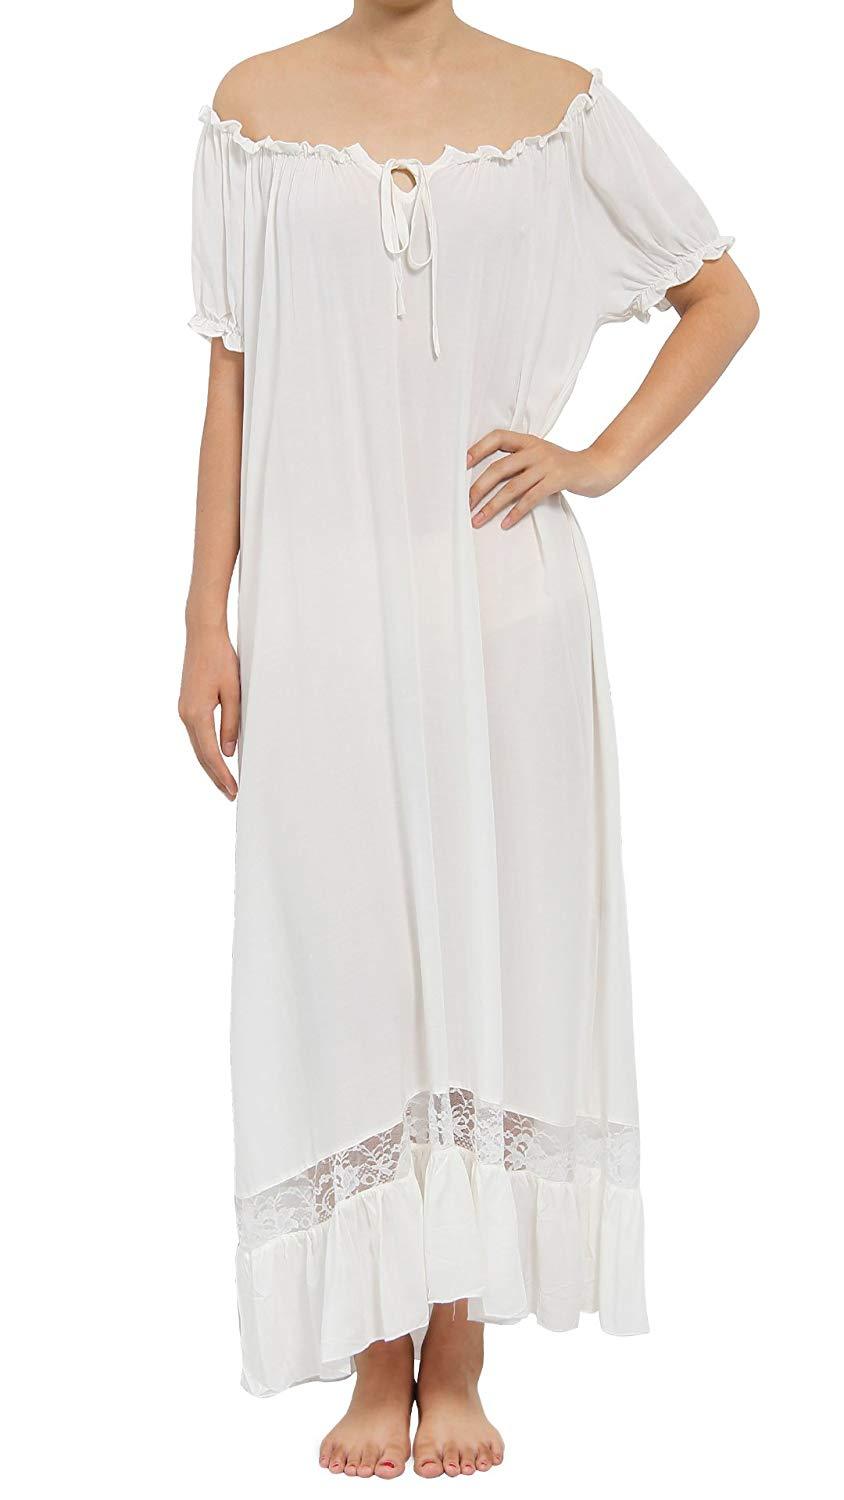 Women's Sleepwear Off The Shoulder Victorian Nightgown - Latuza